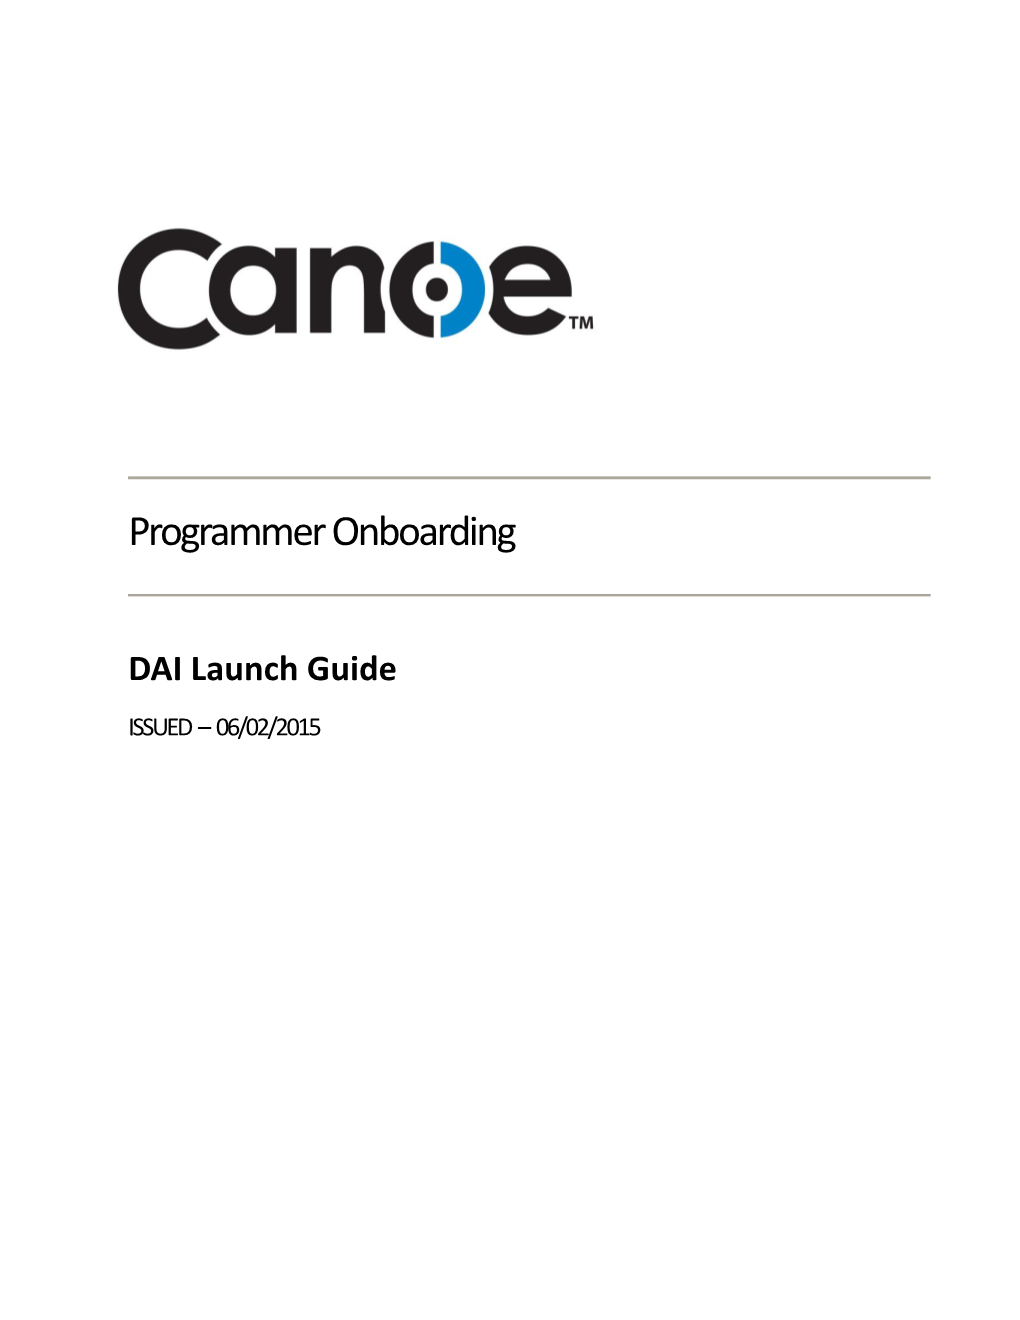 Canoe Programmer Onboarding Guide